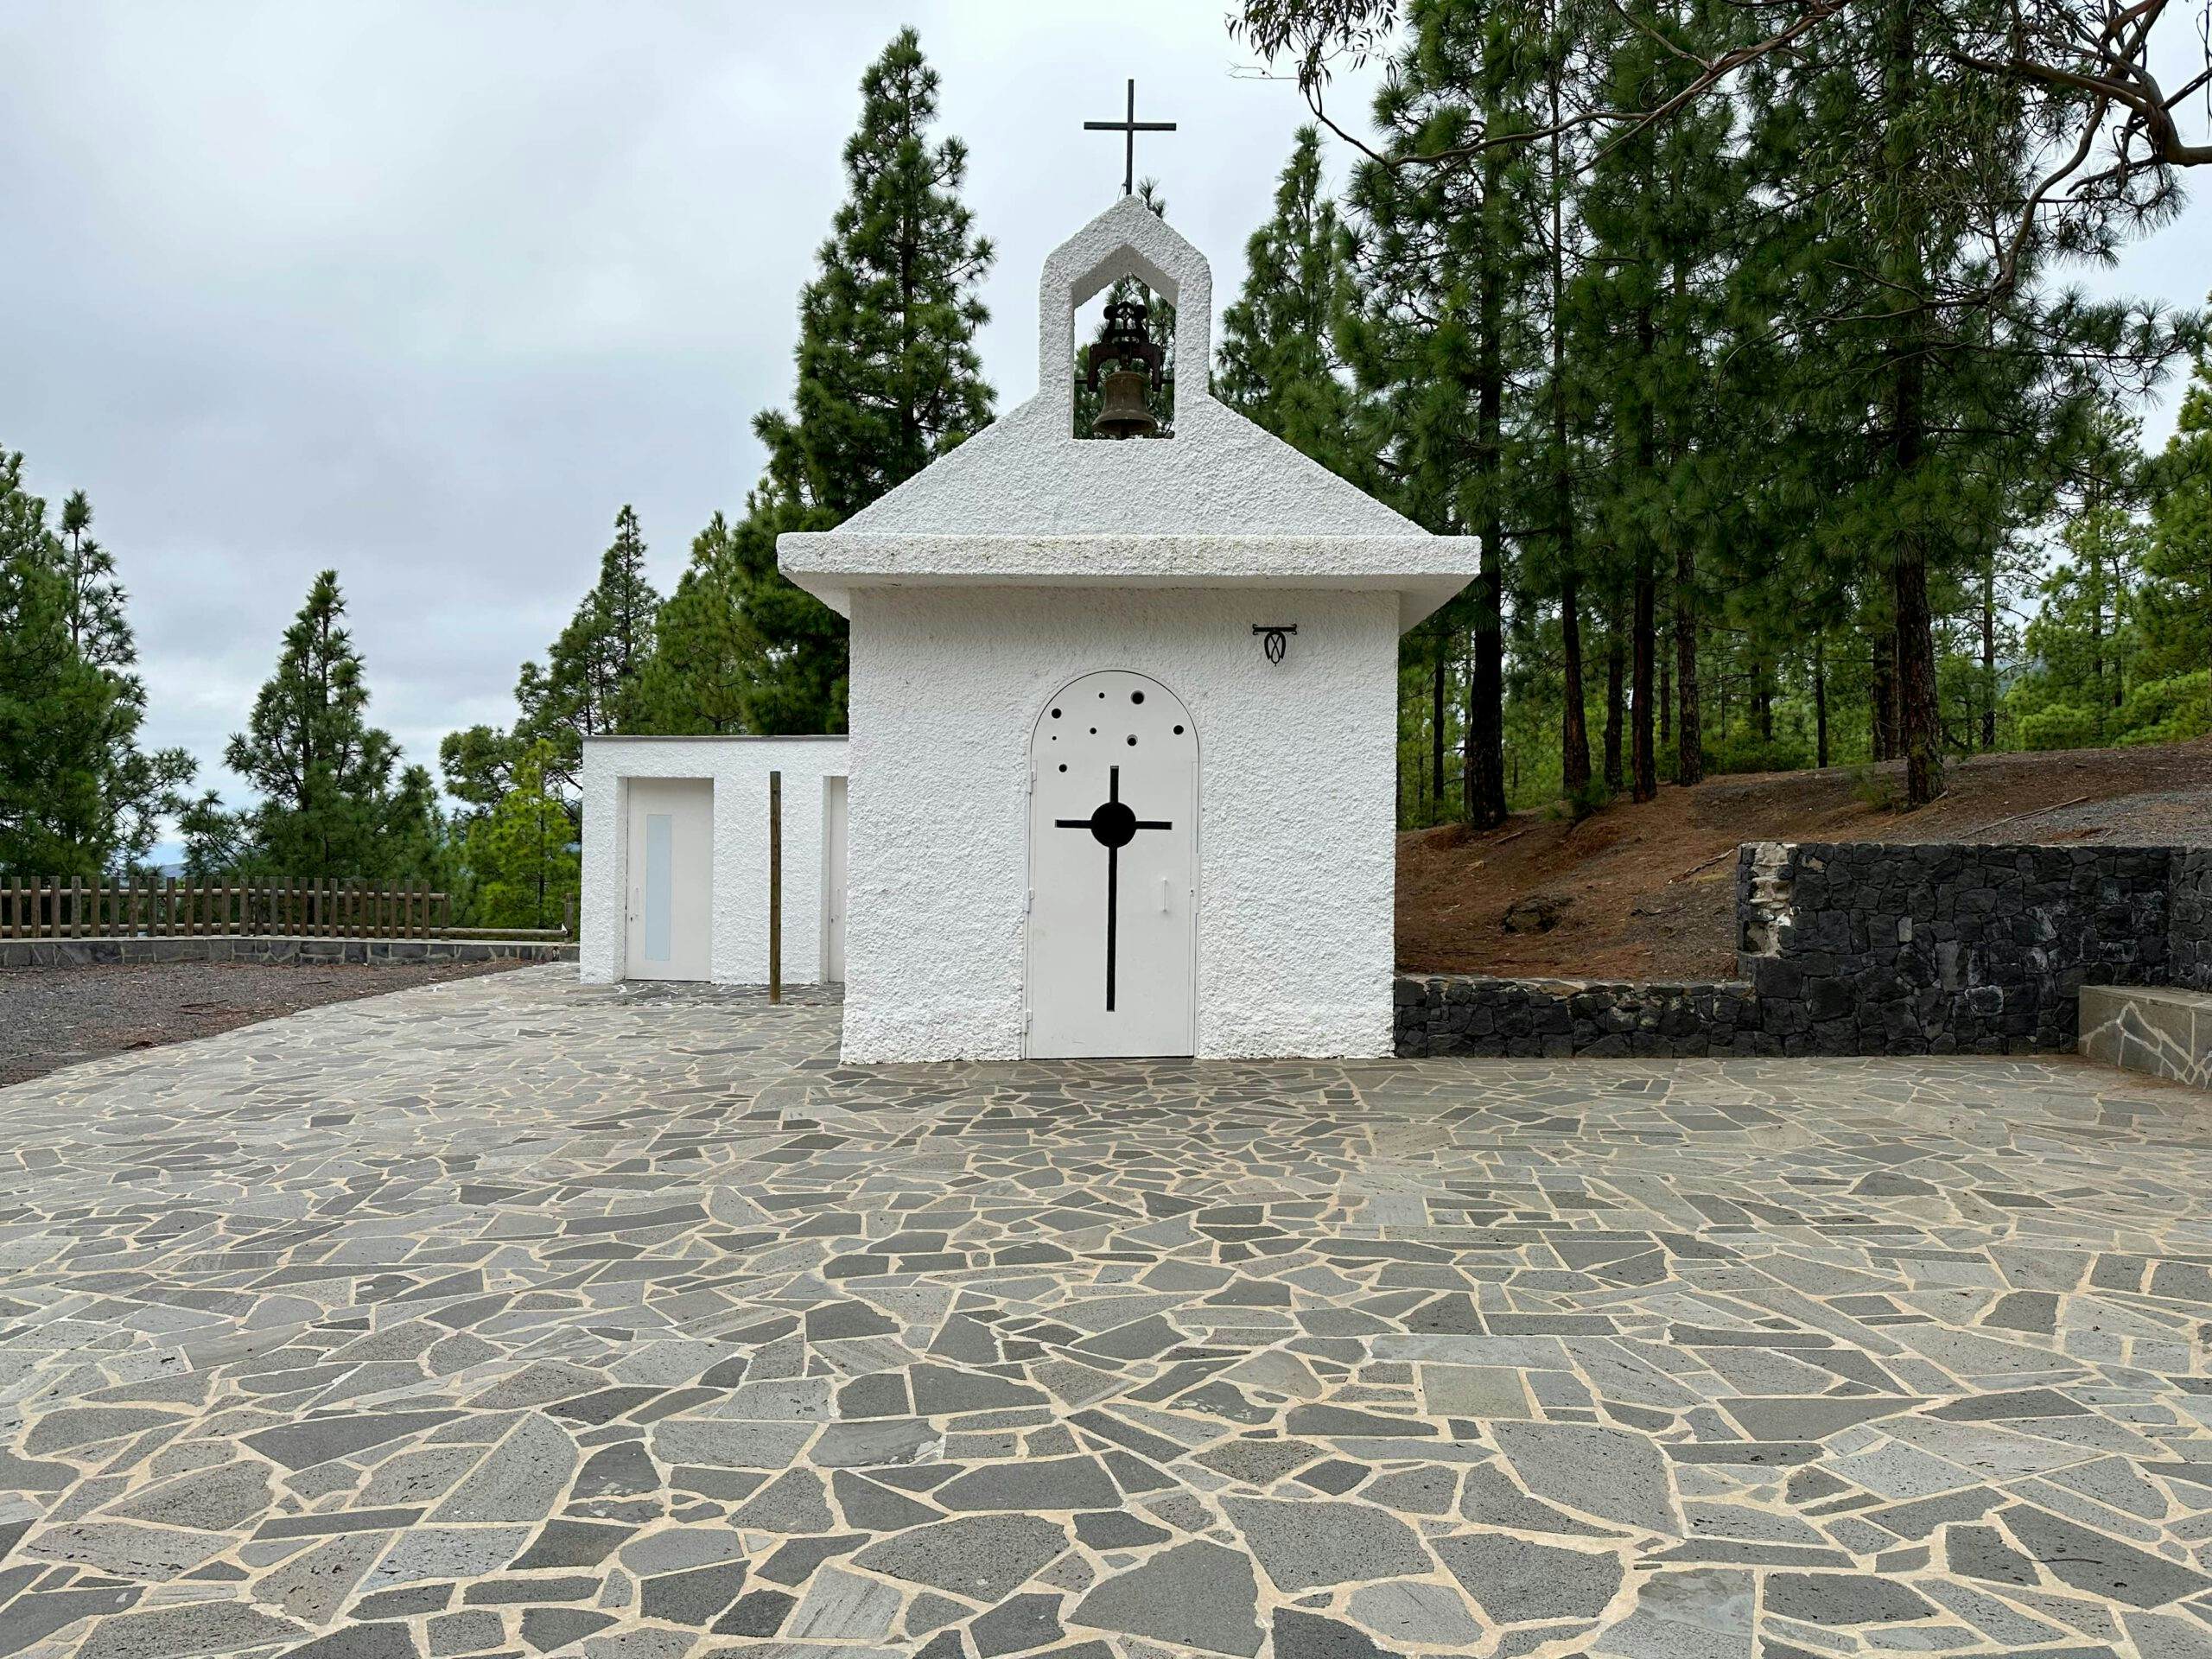 Area Recreativa Los Brezos und die kleine Kapelle San Isidro